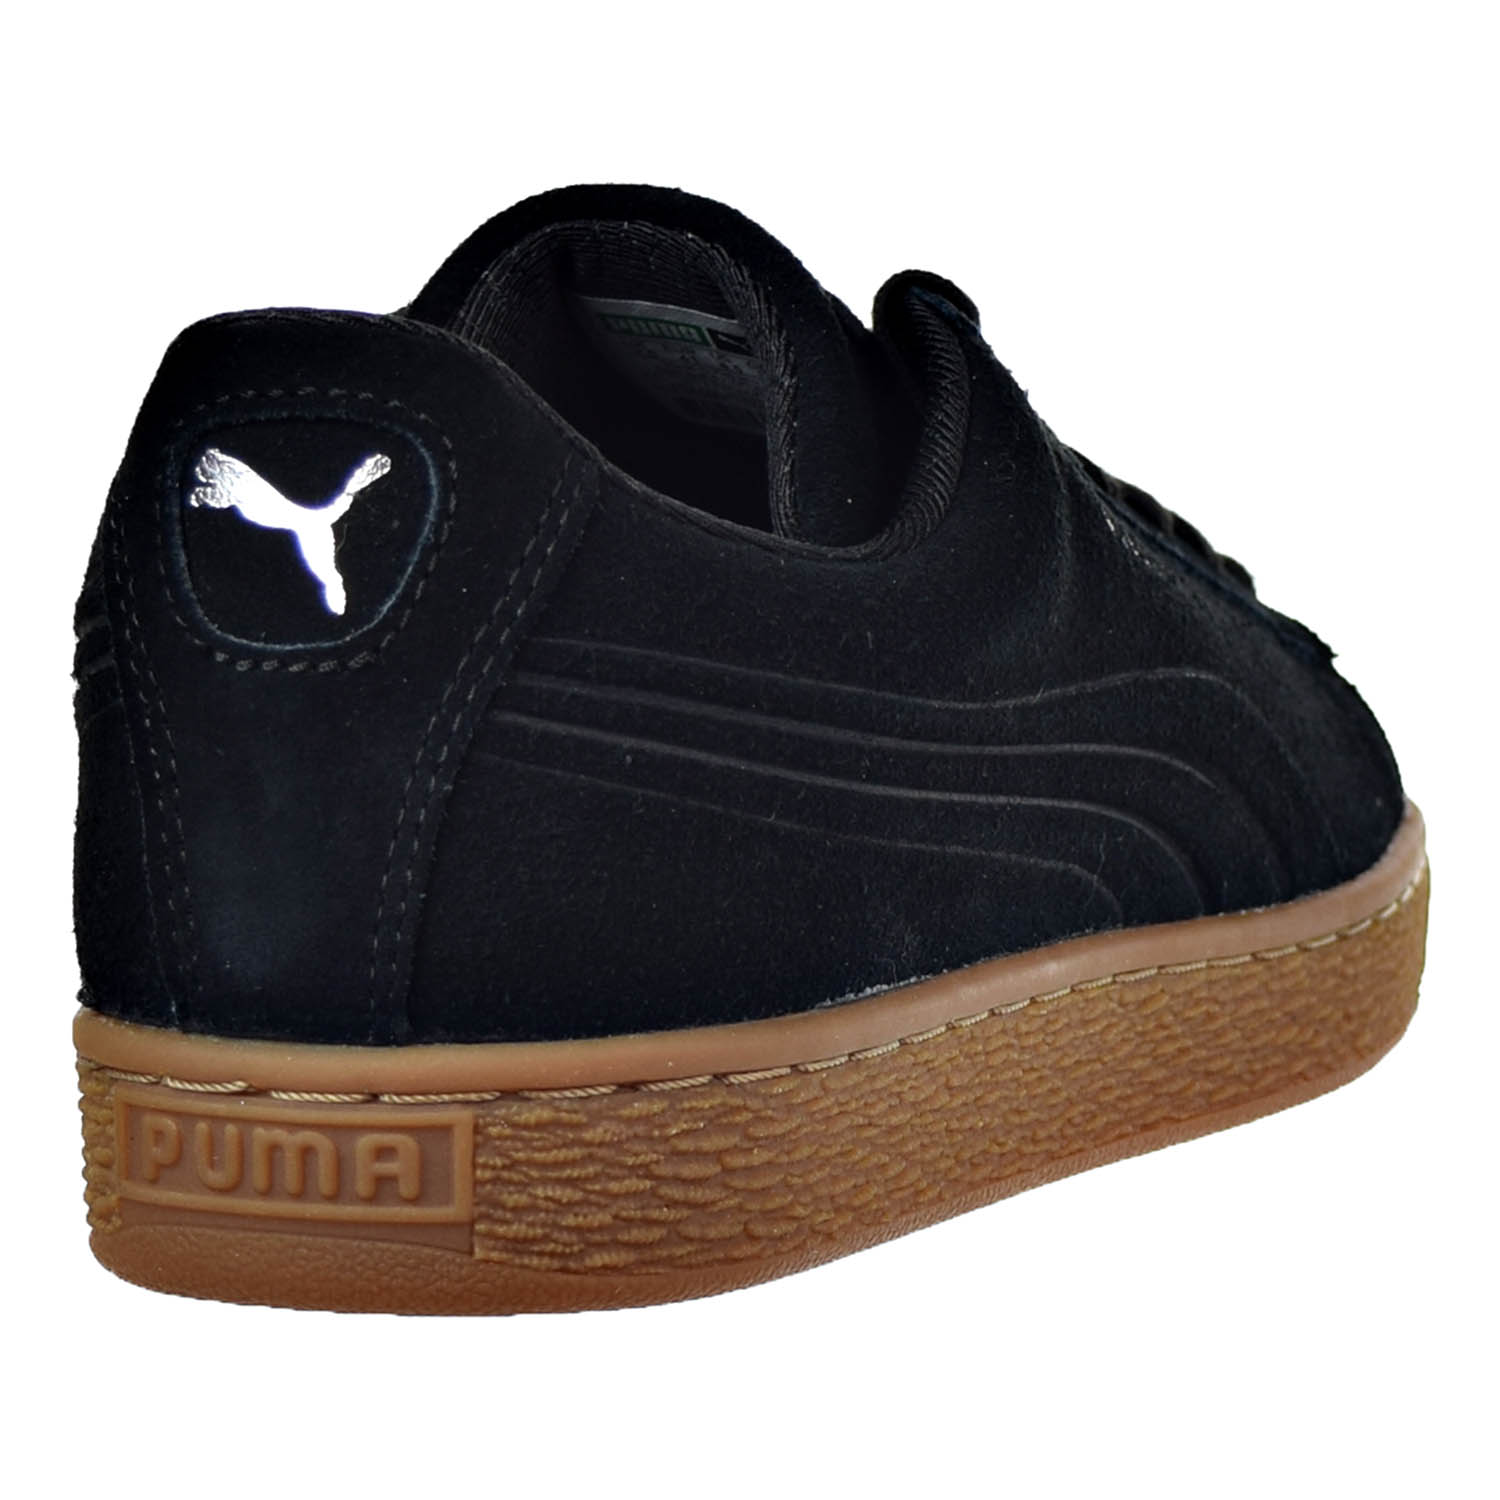 Puma Suede Classic Debossed Q4 Men's Shoes Puma Black/Glacier Grey 361098-02 - image 3 of 6